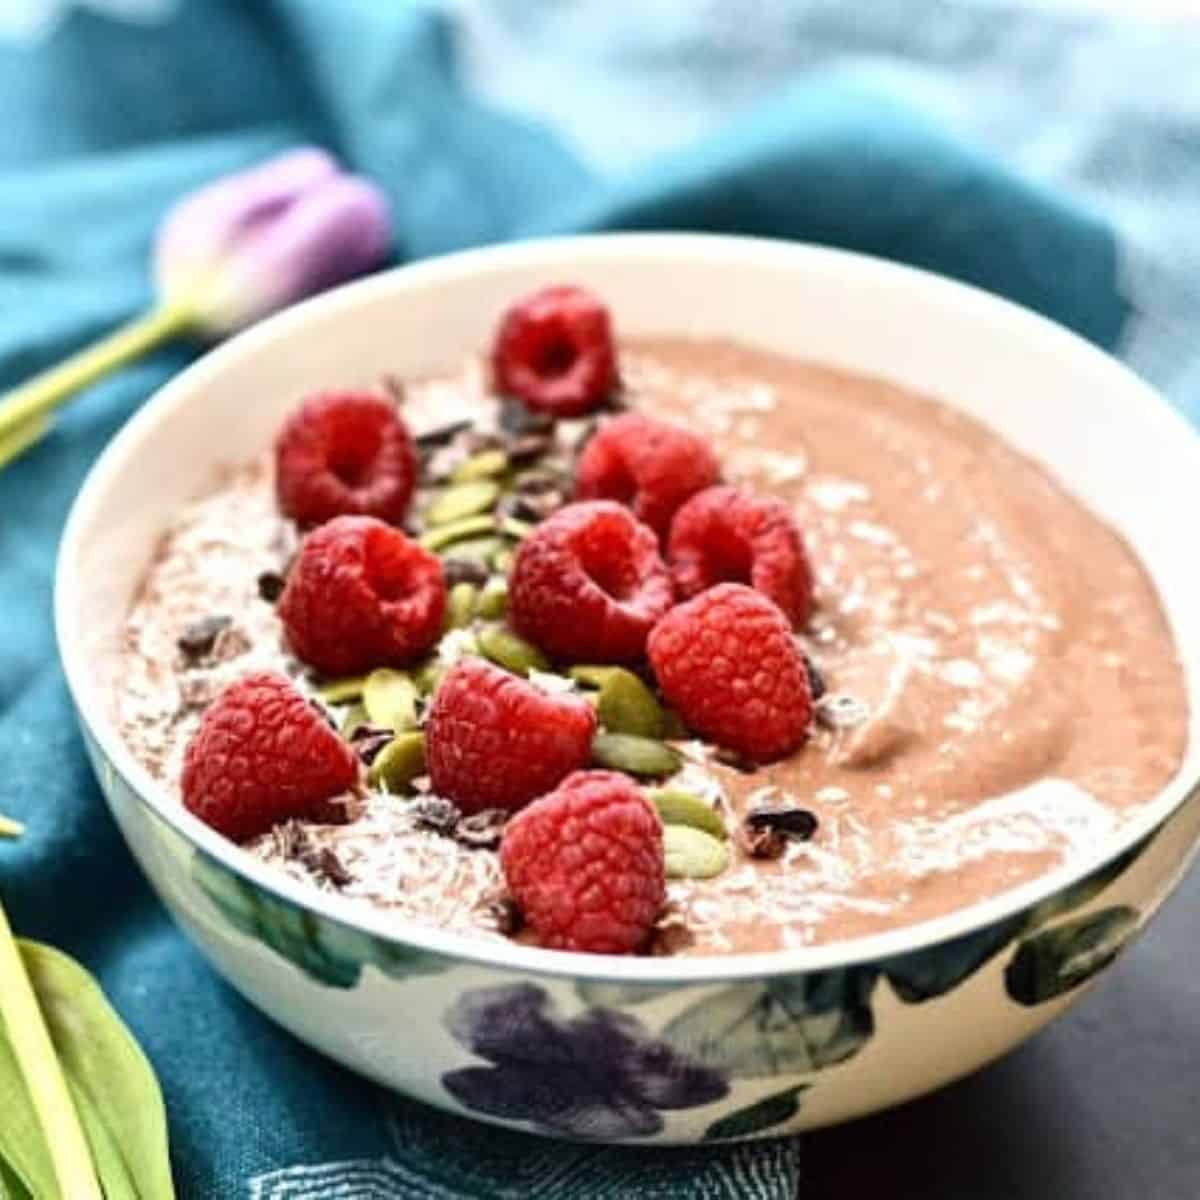 https://www.pureandsimplenourishment.com/wp-content/uploads/2022/03/chocolate-raspberry-smoothie-bowl-feature-image.jpg